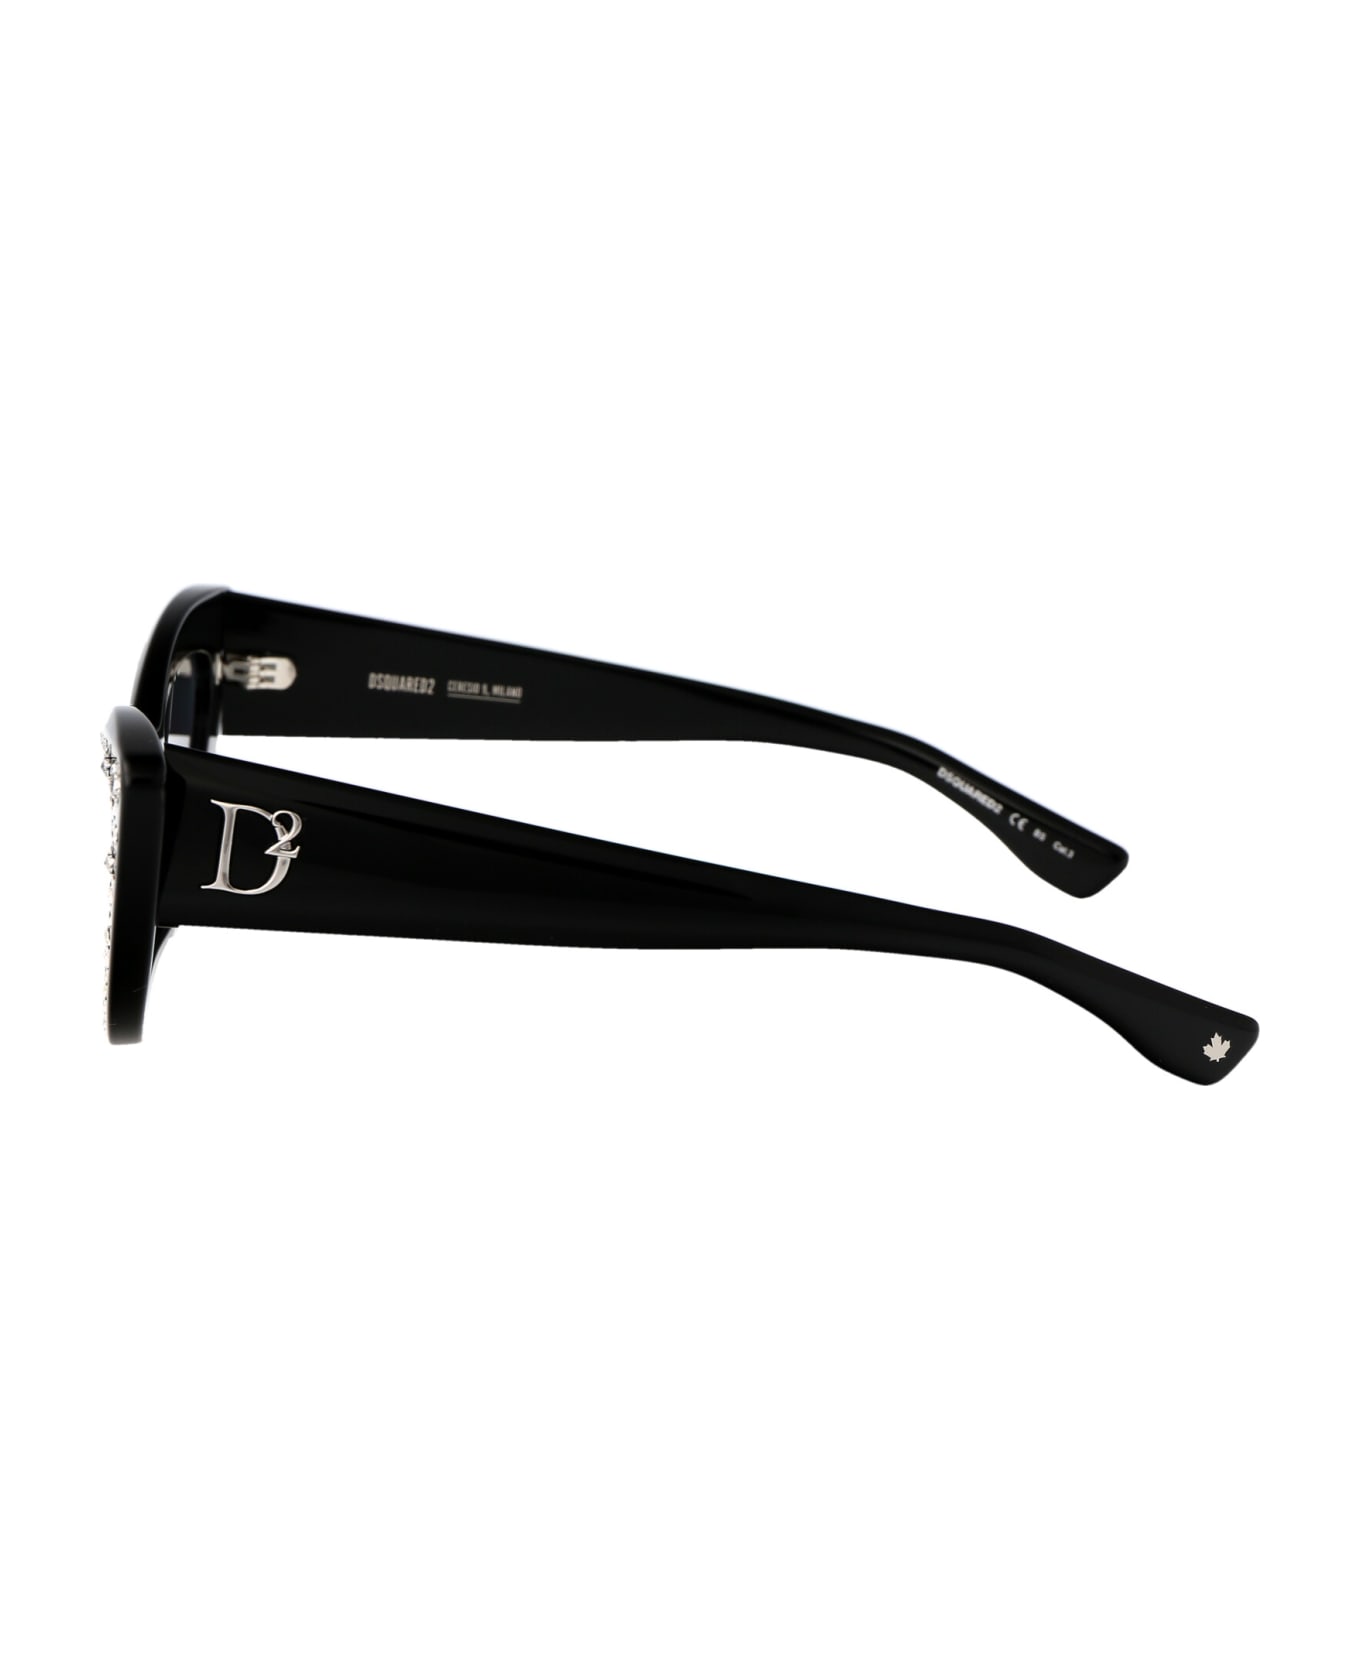 Dsquared2 Eyewear D2 0092/n/s Sunglasses - 807IR BLACK